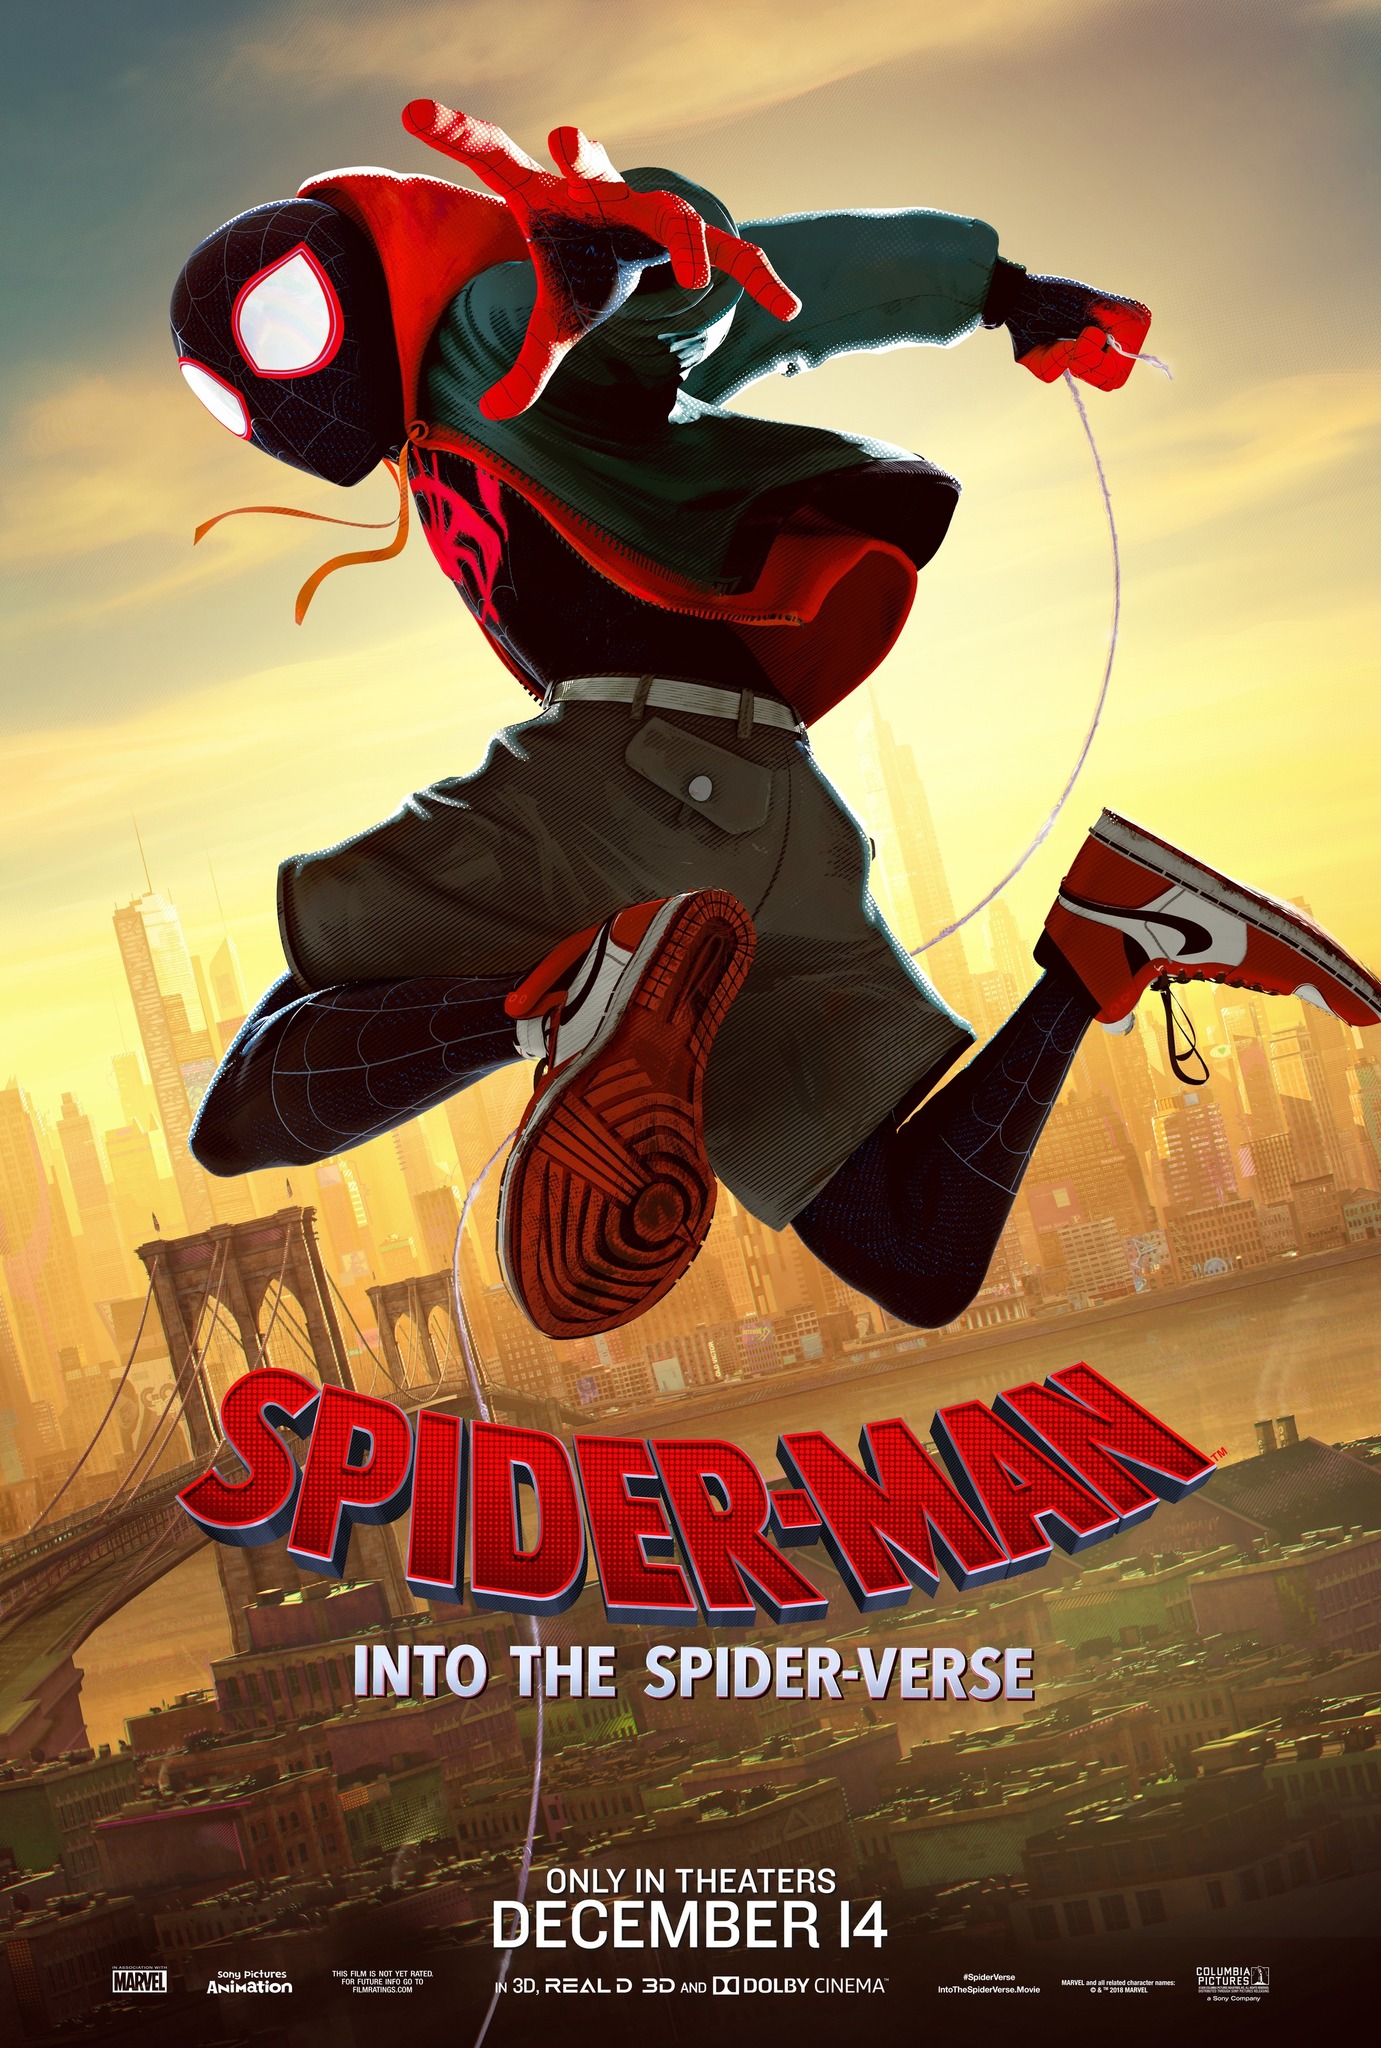 ScreenHub-Movie-SpiderManIntothespiderverse